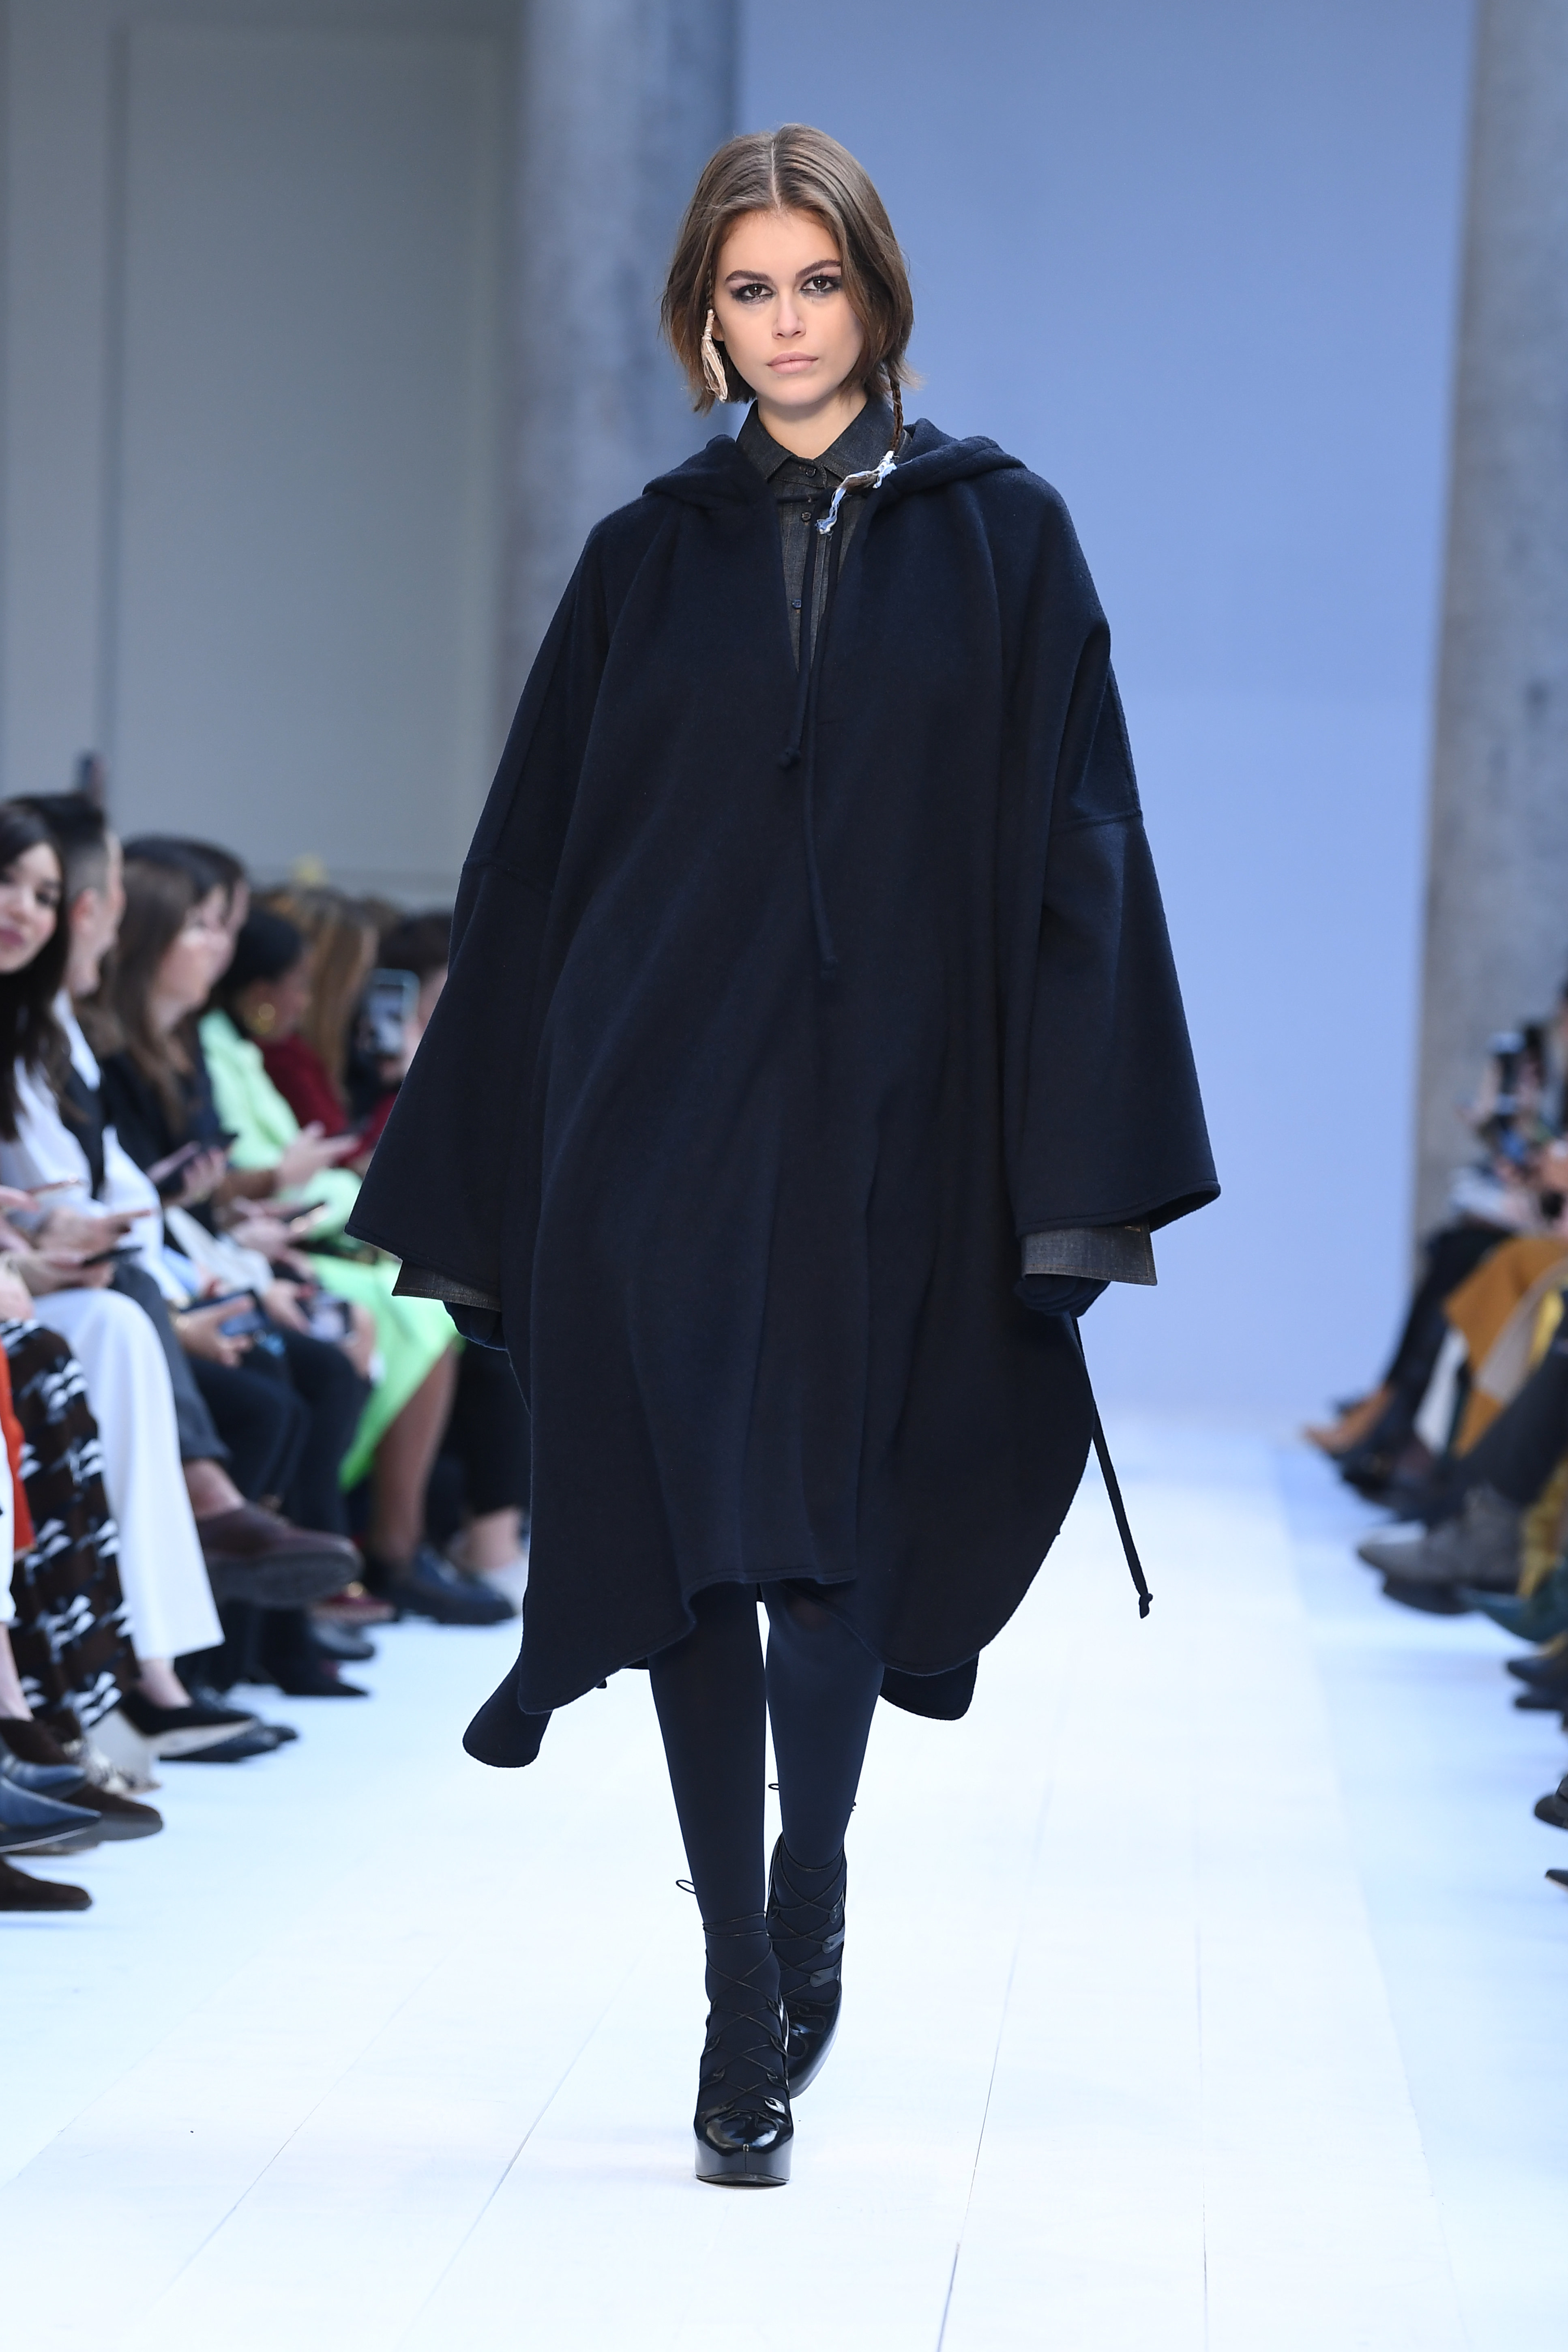 Max Mara's Milan Fashion Week Fall 2020 Show Review